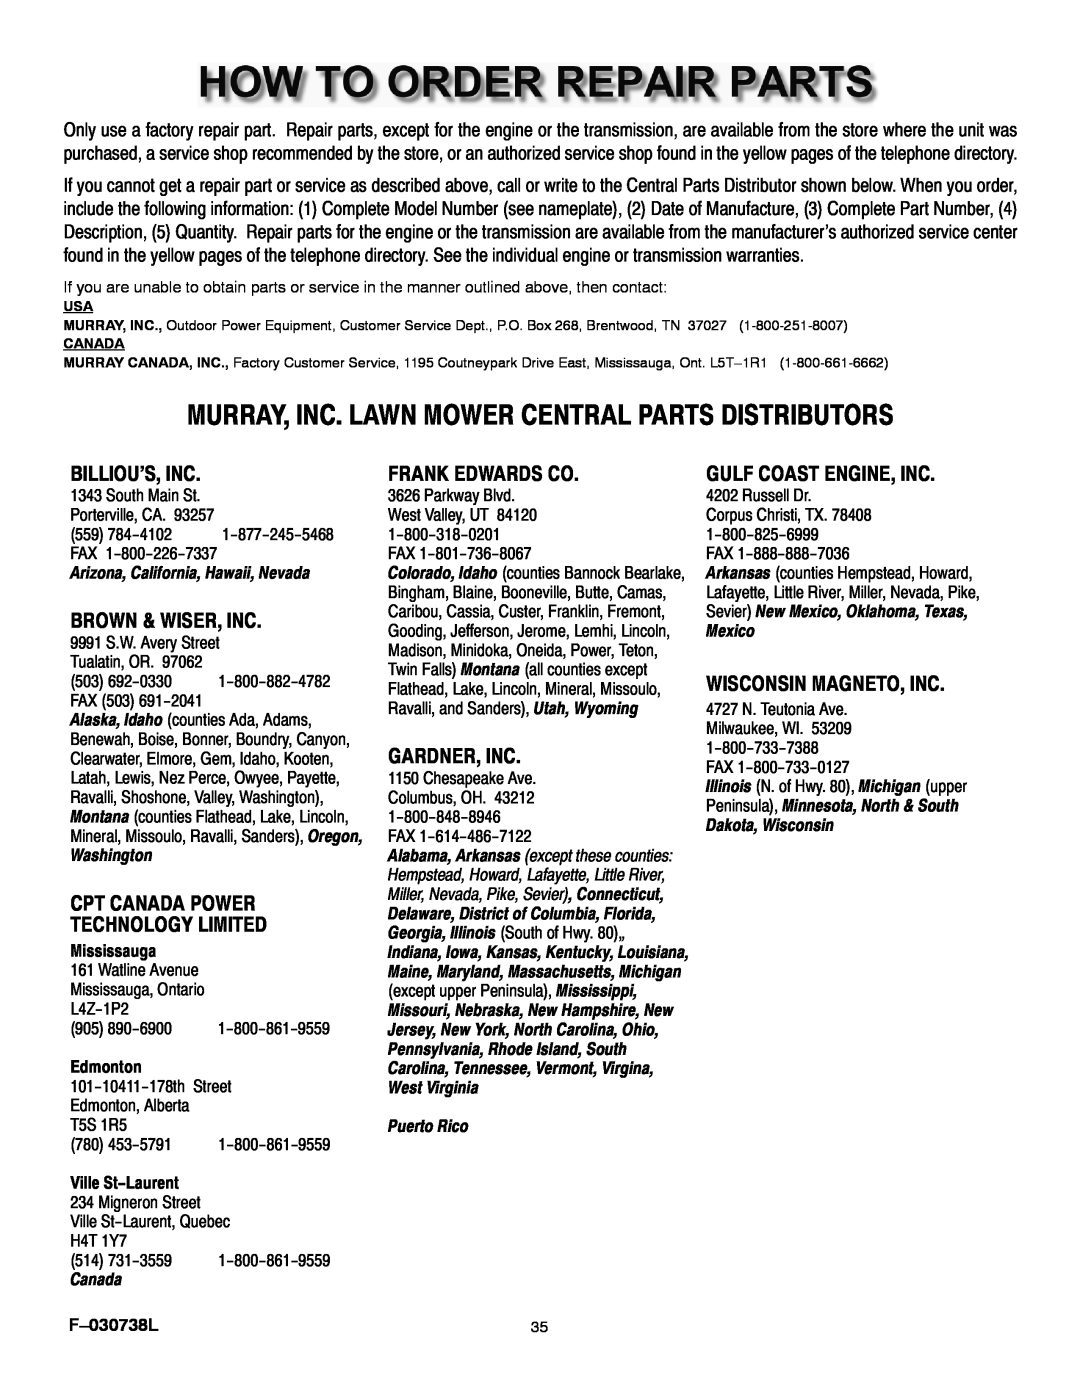 Murray 425603x99A Murray, Inc. Lawn Mower Central Parts Distributors, Billious, Inc, Brown & Wiser, Inc, Frank Edwards Co 